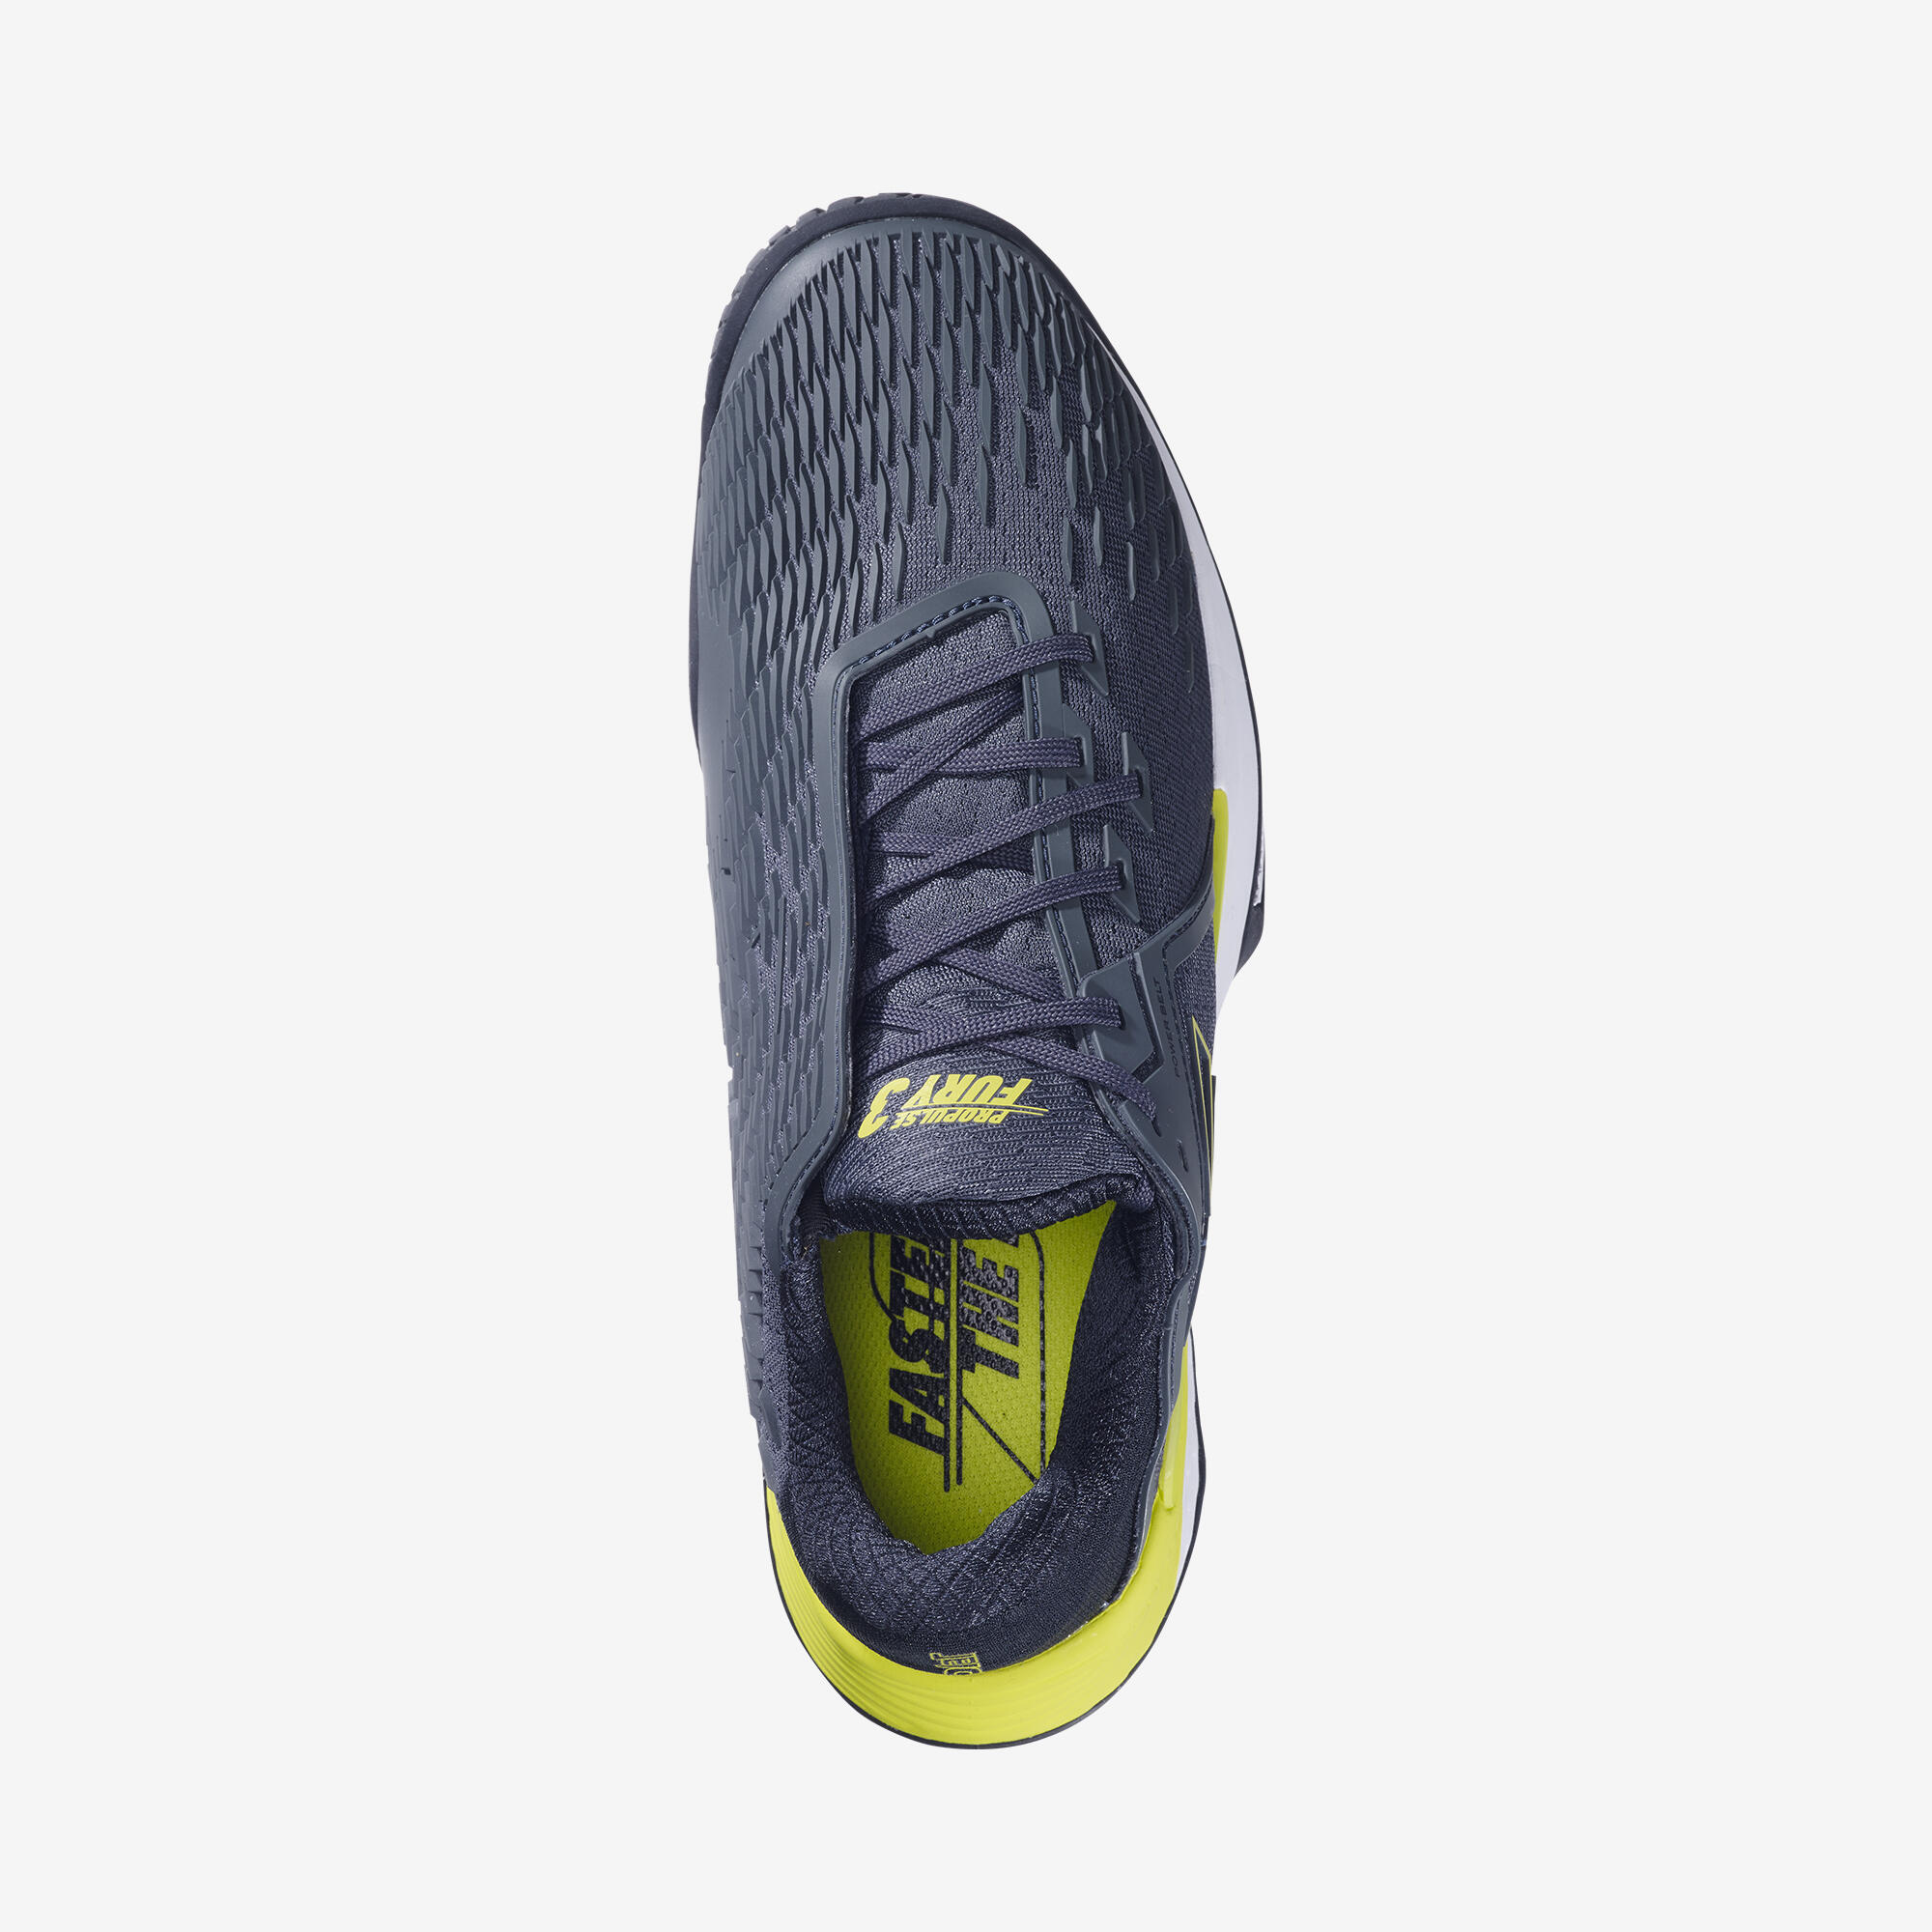 Men's Multicourt Tennis Shoes Propulse Fury - Grey/Green 4/5